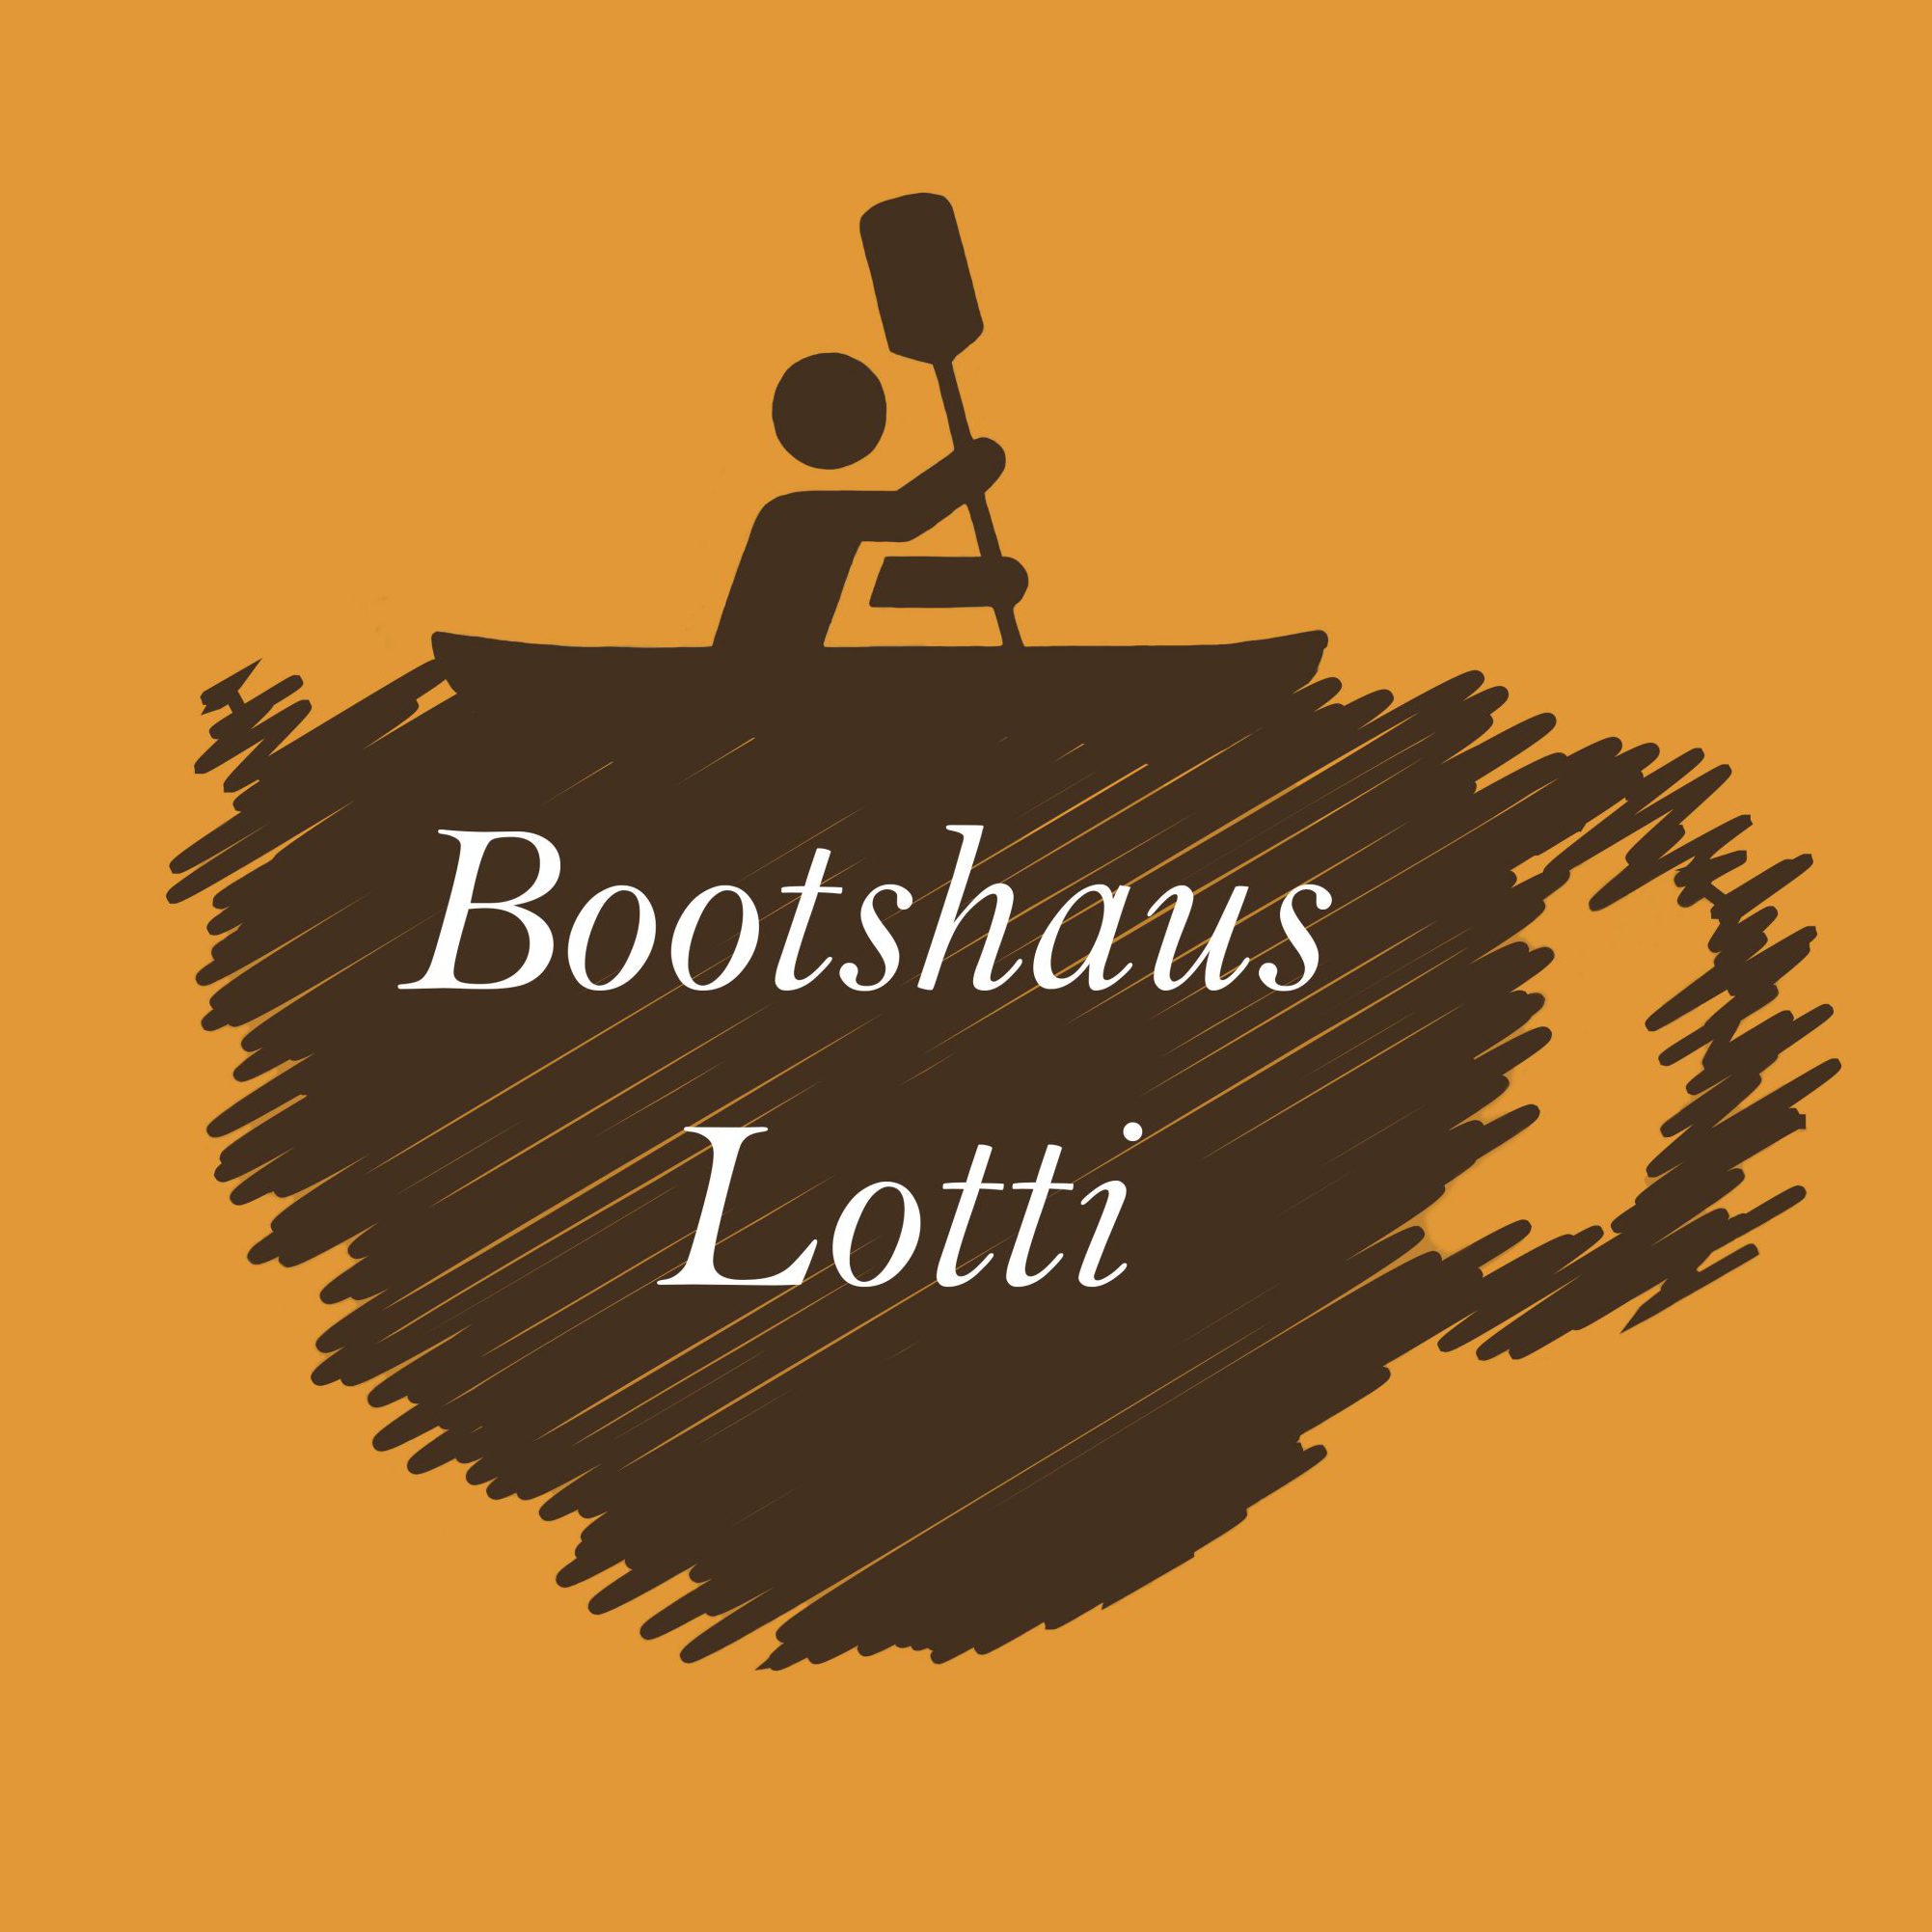 Bootshaus Lotti